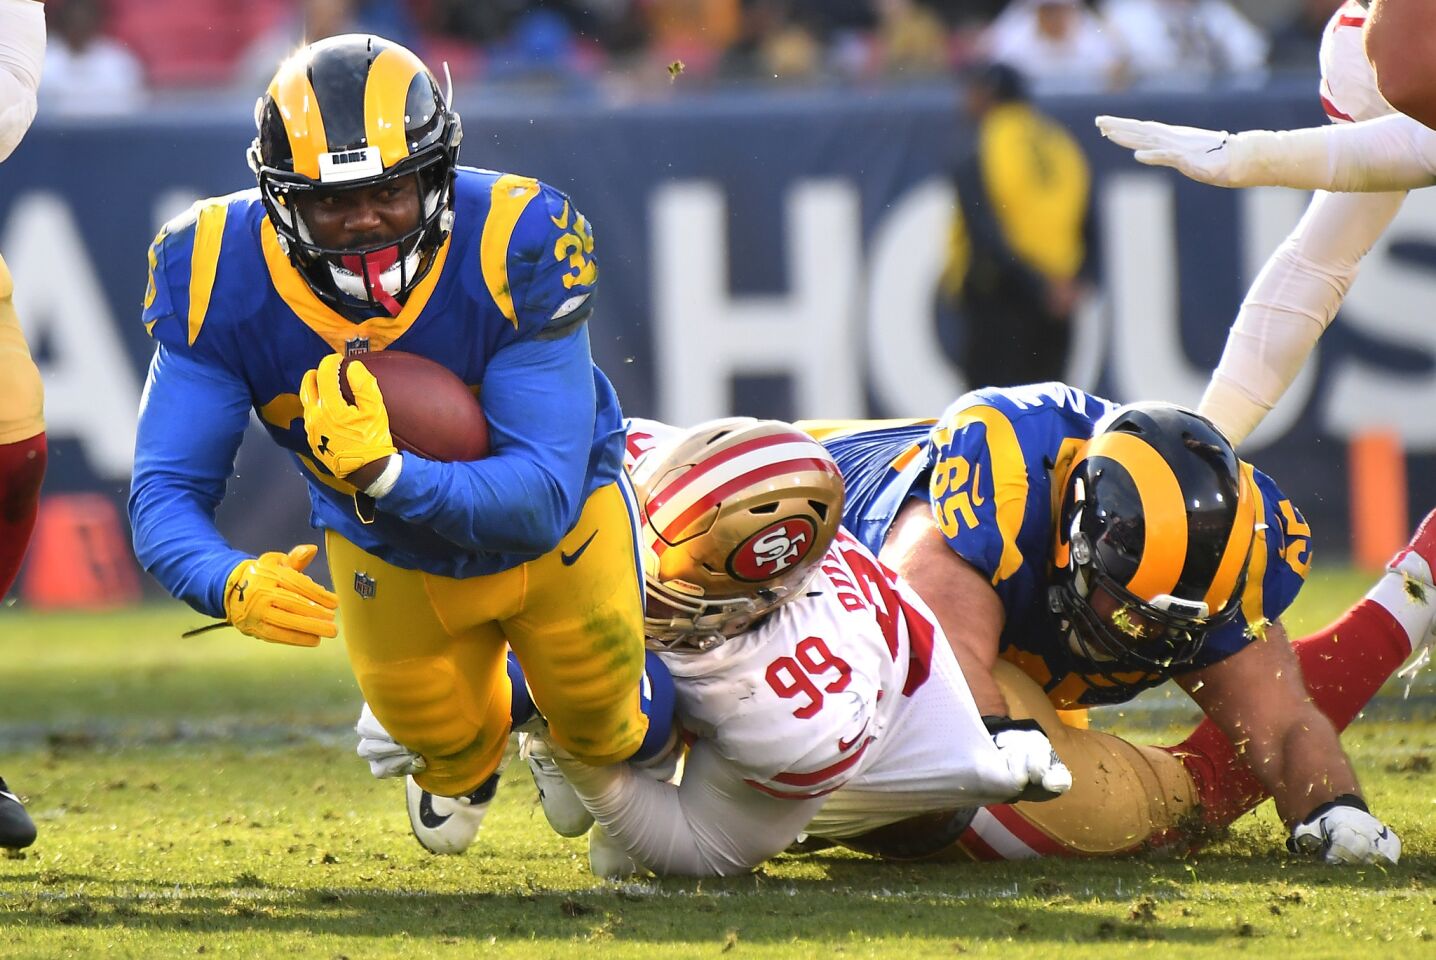 Rams running back C.J. Anderson is tackled by 49ers defensive lineman DeForest Buckner.